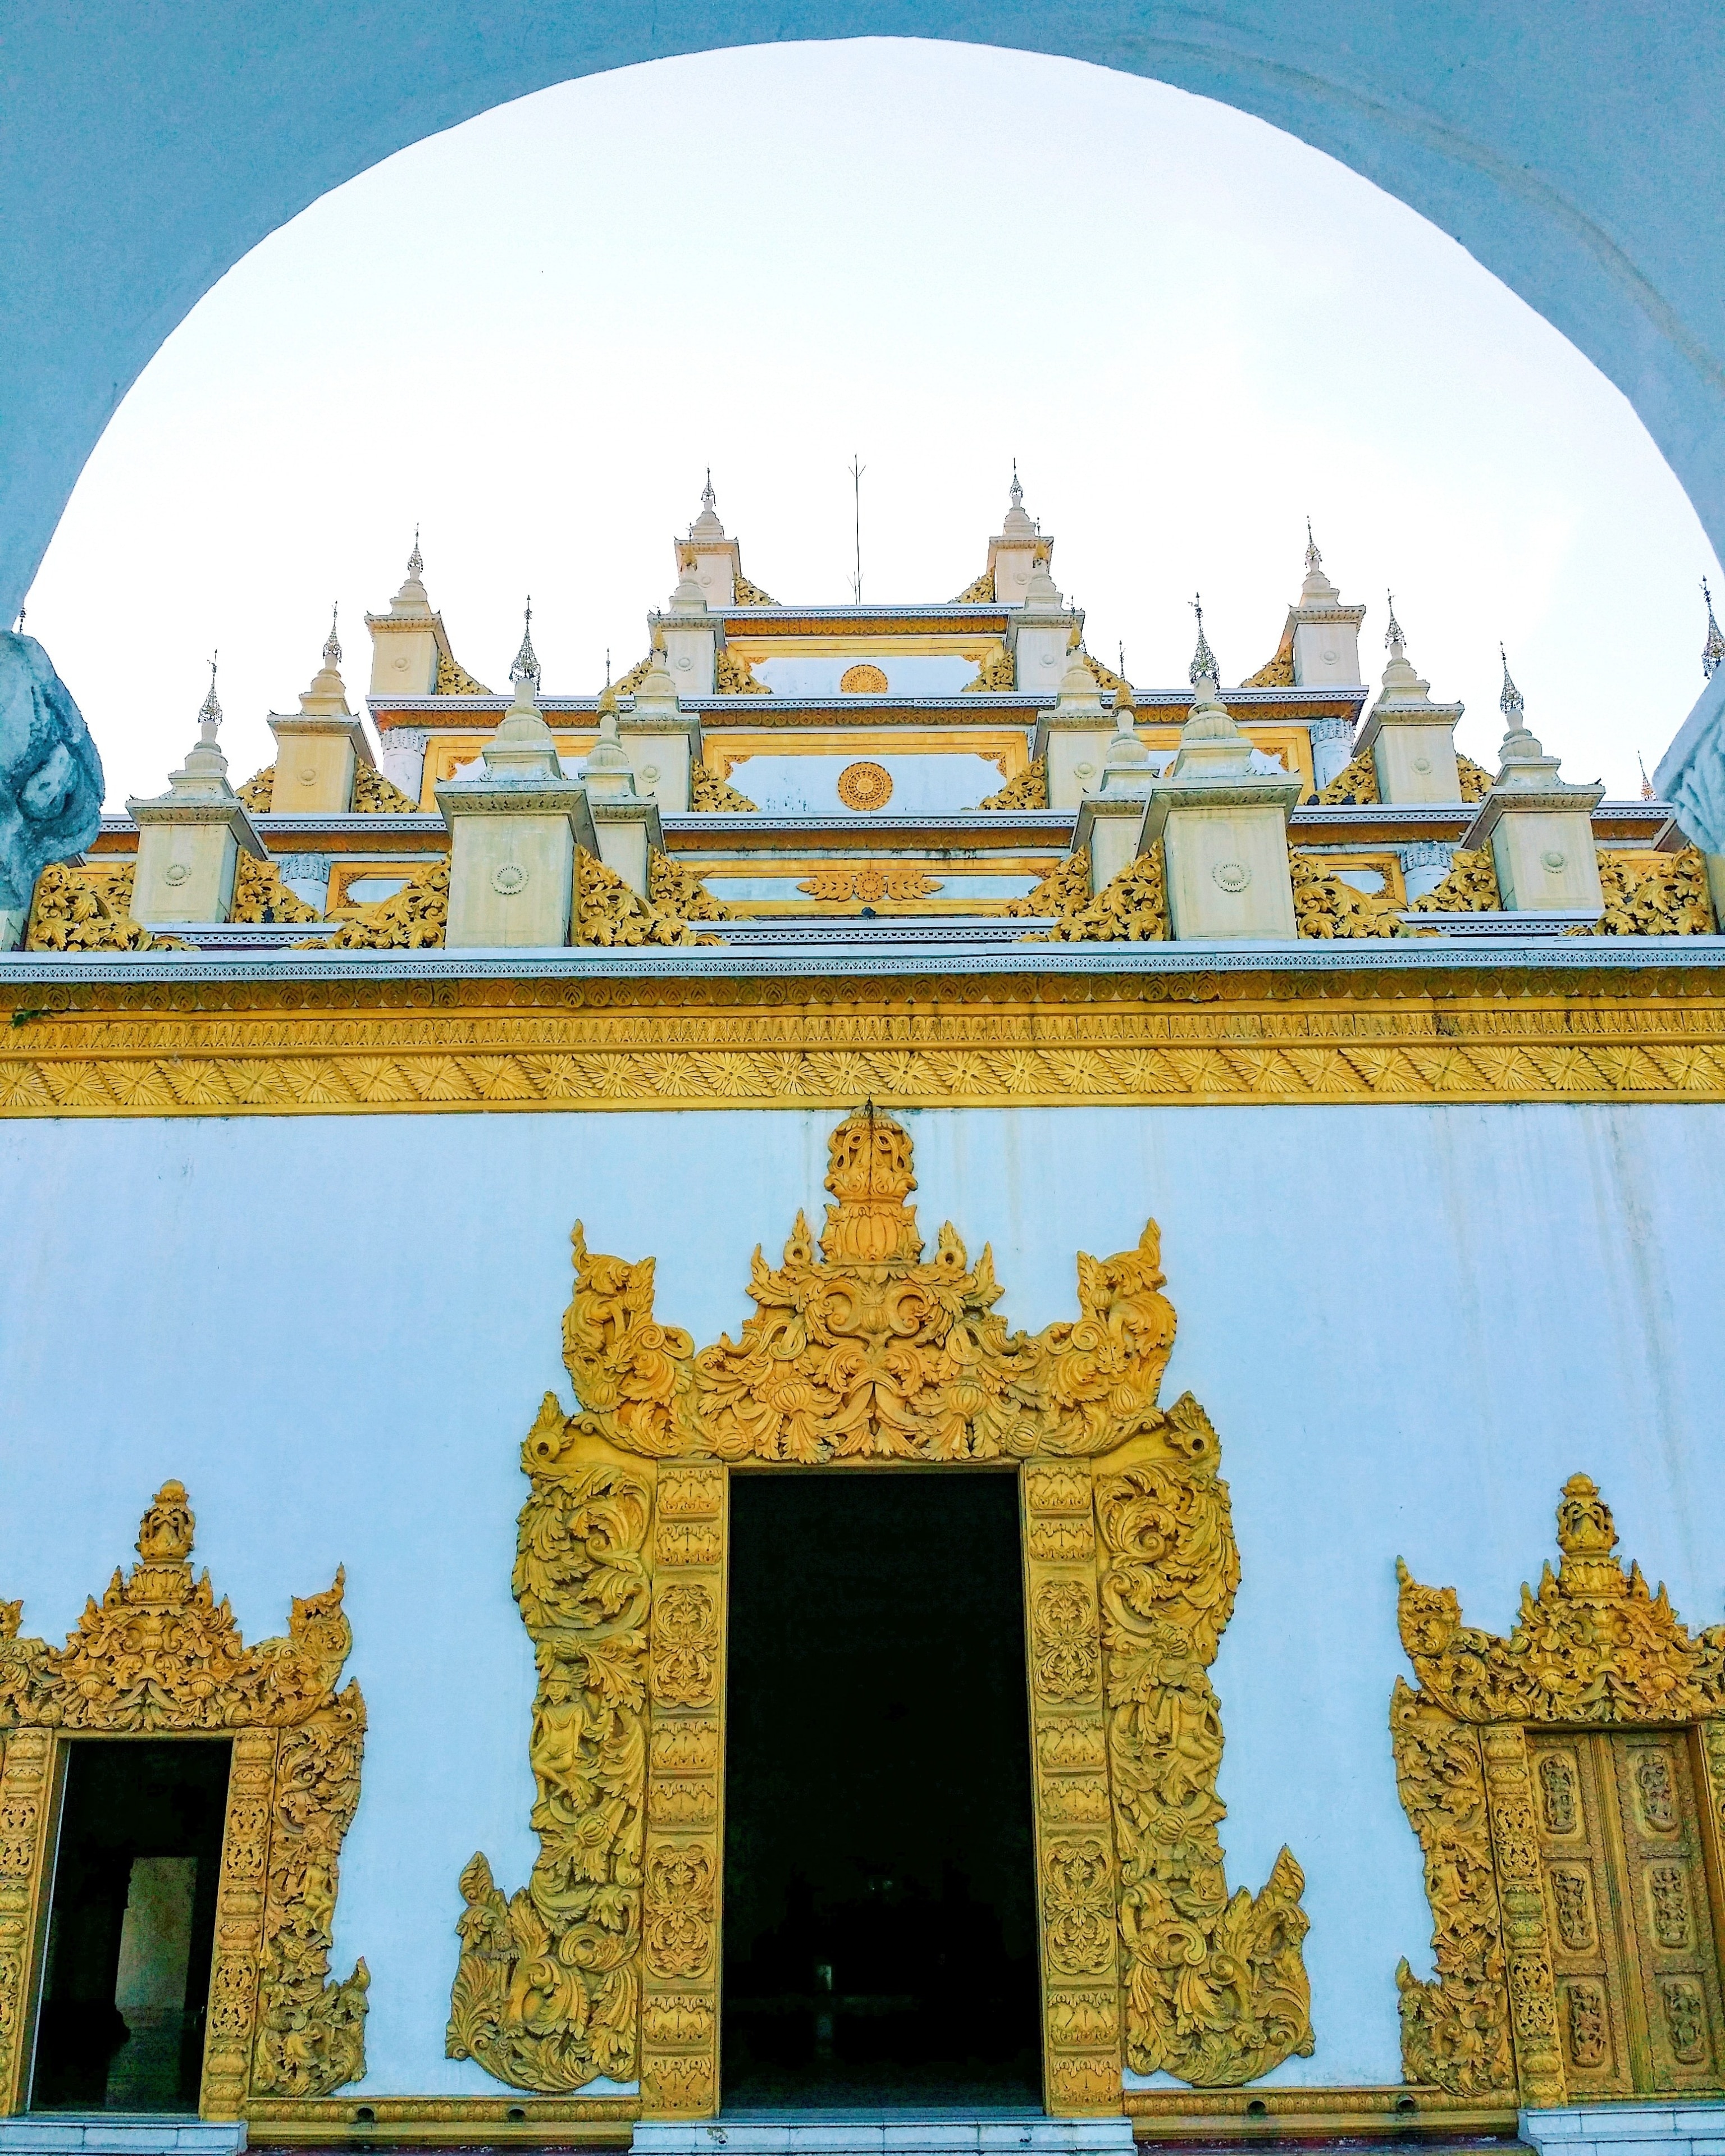 Behind Shwenandaw Monastery in Mandalay, Myanmar

#Golden #Burma #Mandalay #Myanmar #temple #Asia #SoutheastAsia